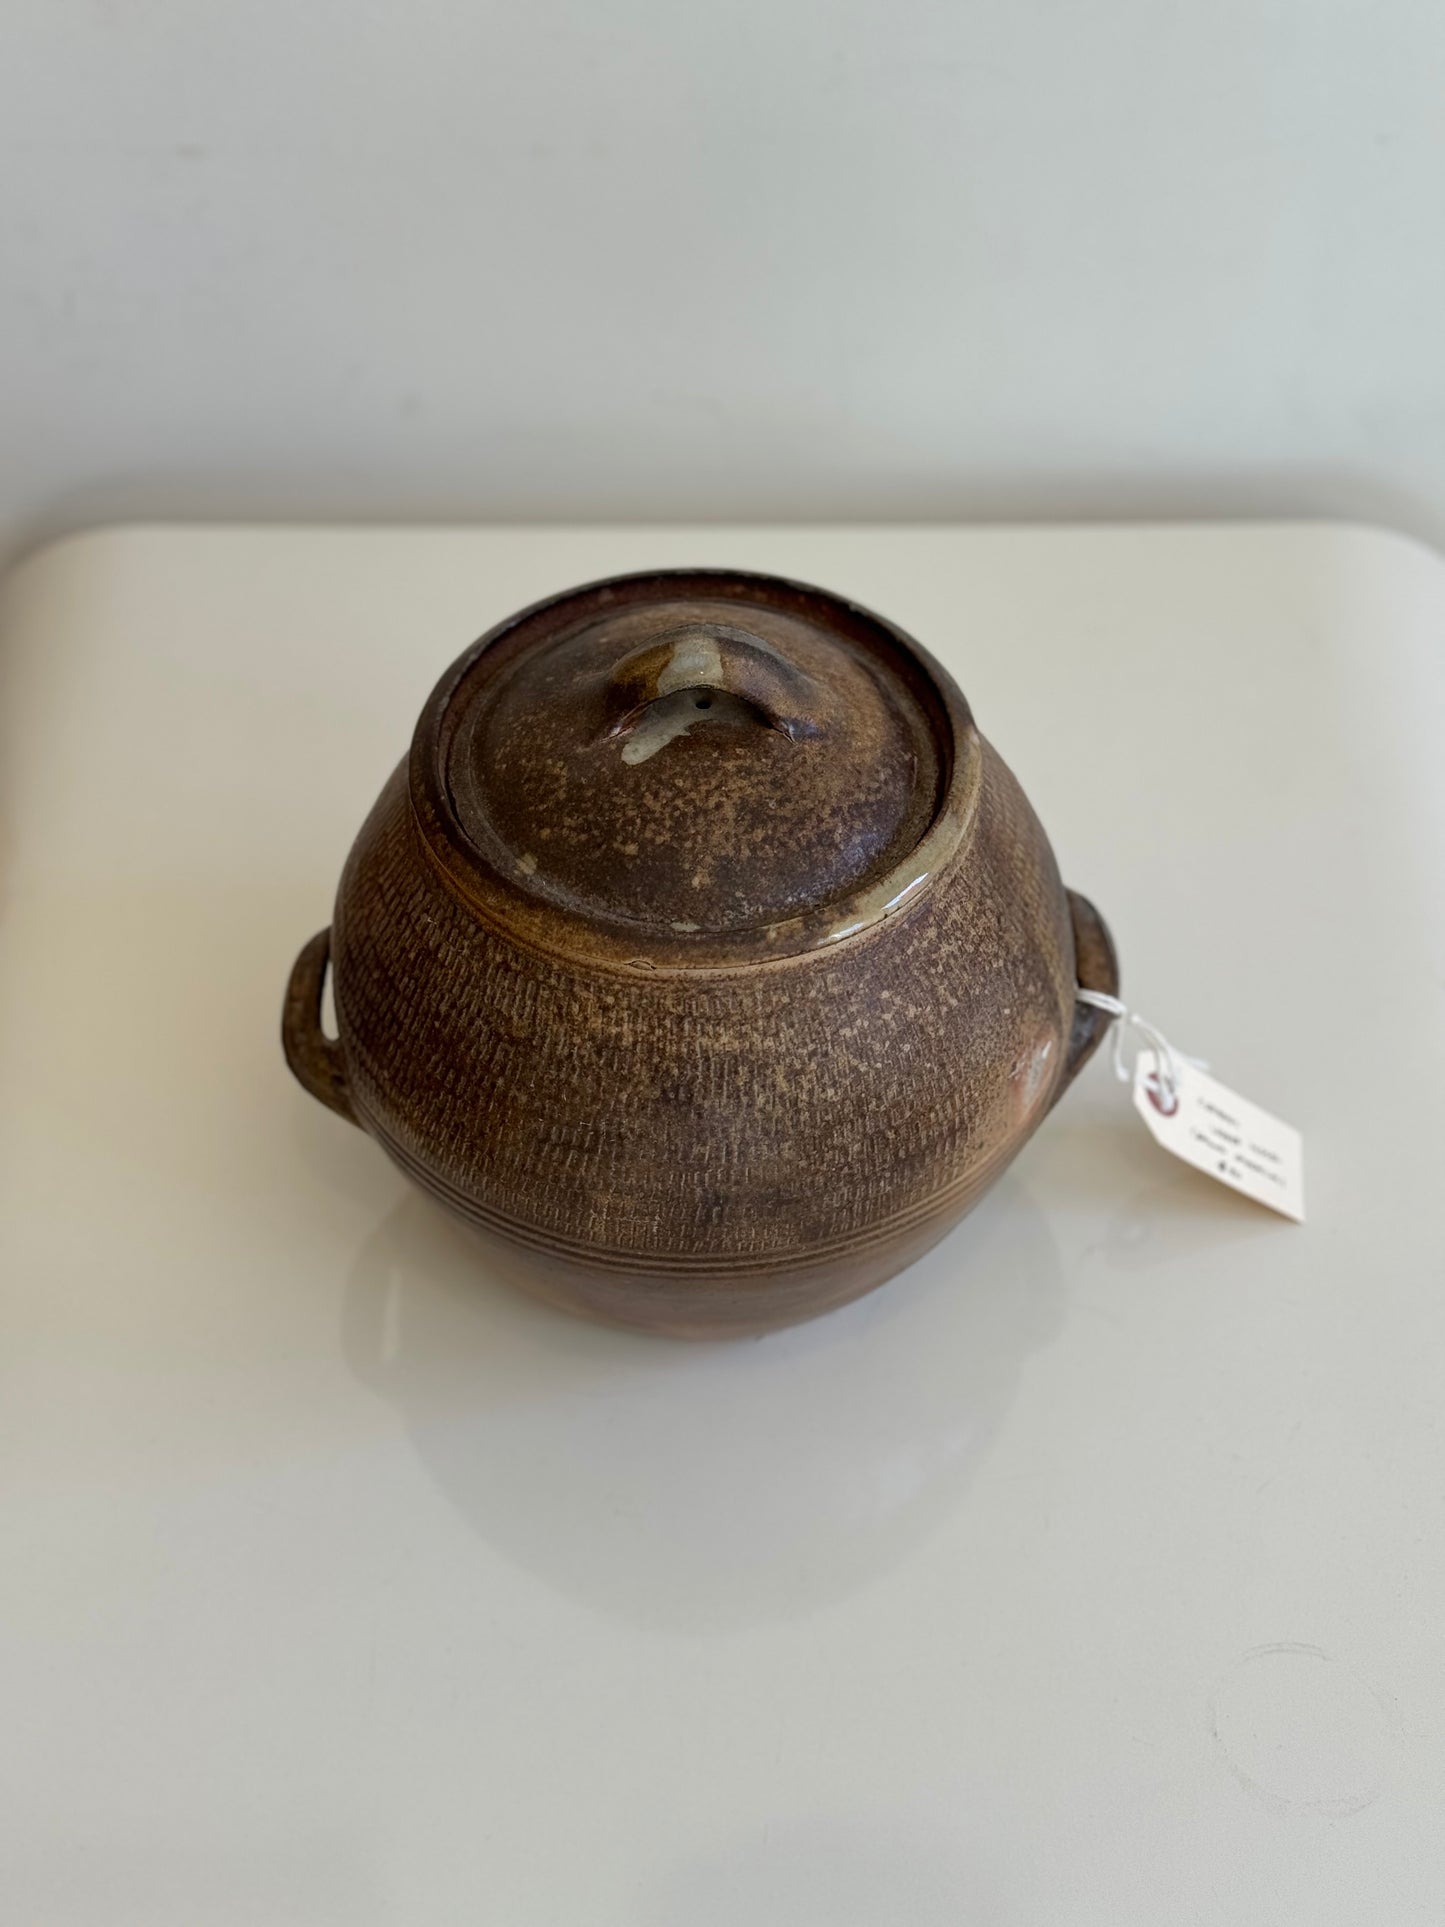 Spherical Lidded Stoneware Pot w/ Handles